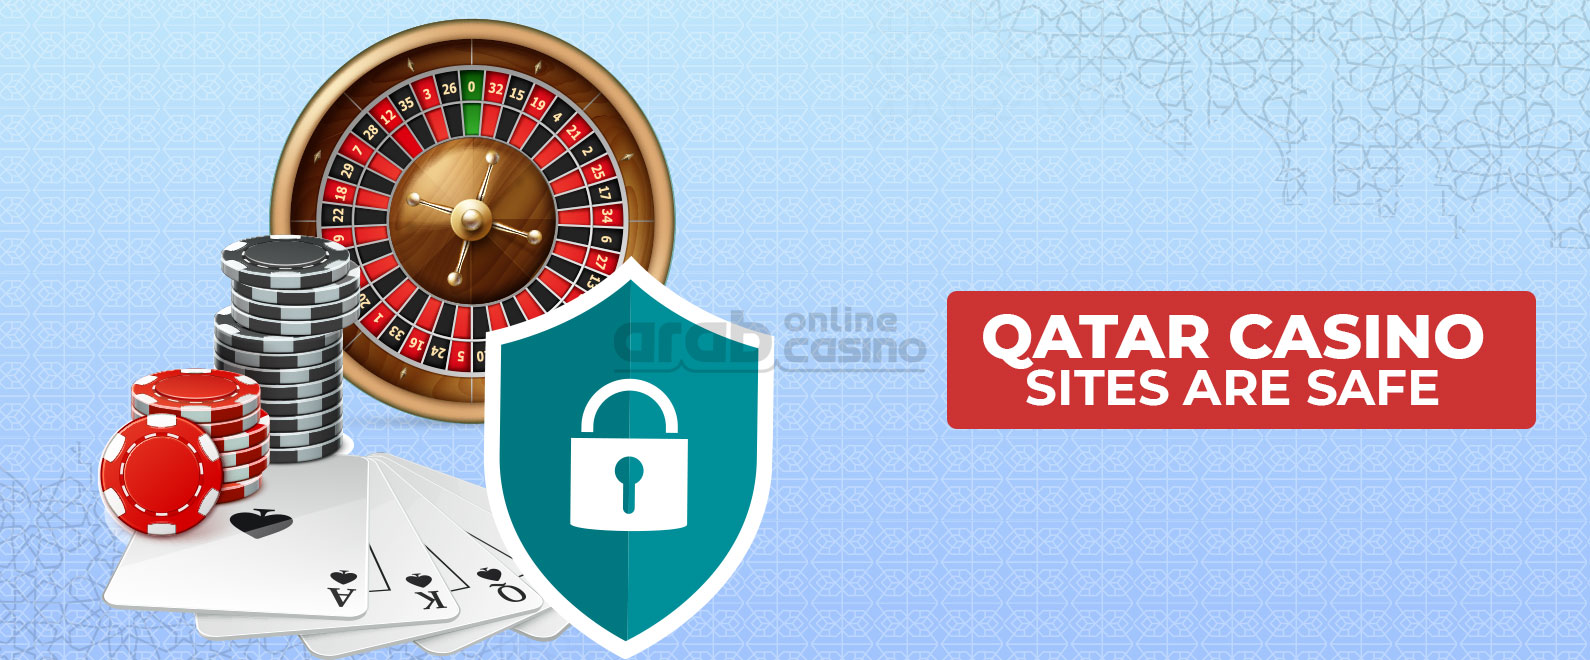 qatar casinos are safe